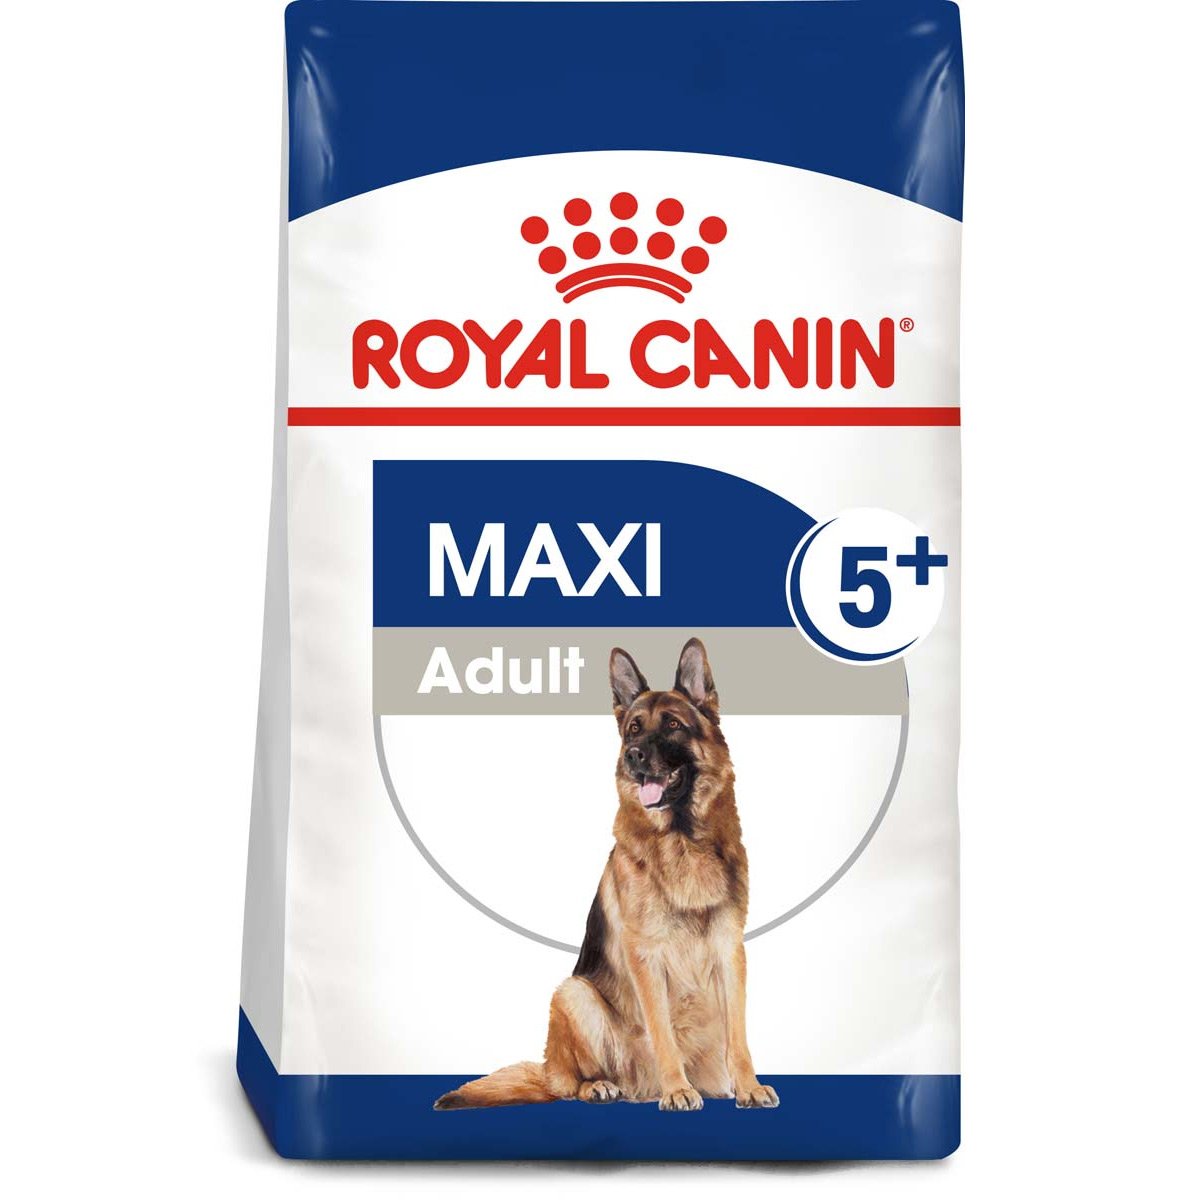 ROYAL CANIN MAXI Adult 5+ Trockenfutter für ältere große Hunde 2x15kg von Royal Canin